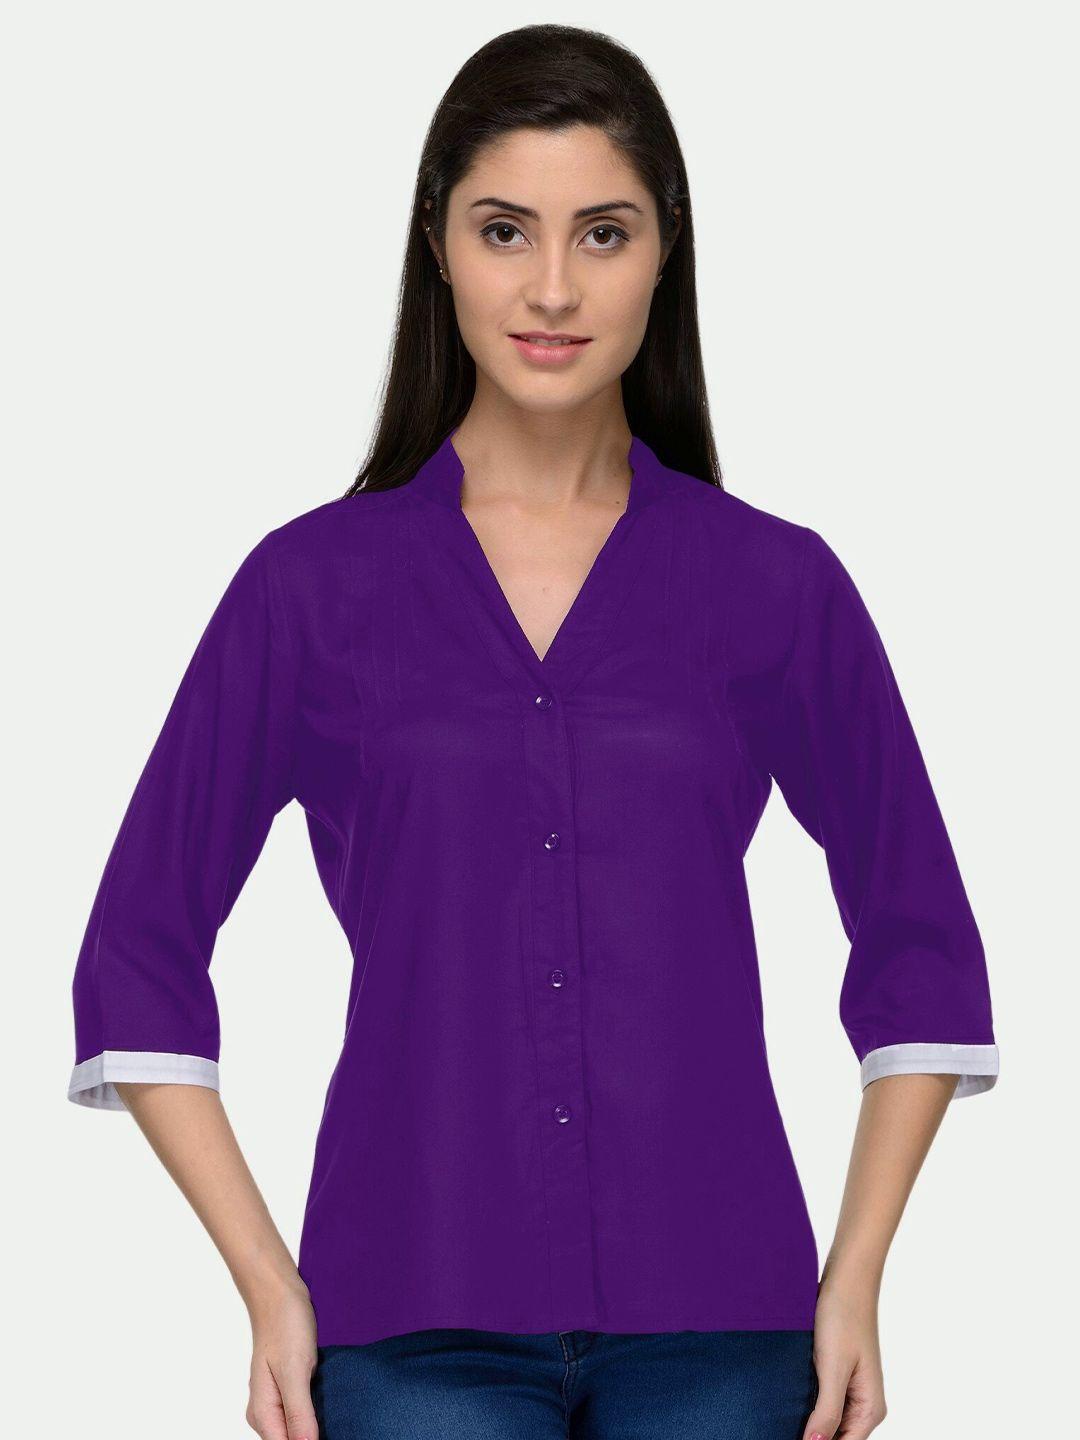 patrorna-women-purple-comfort-casual-shirt